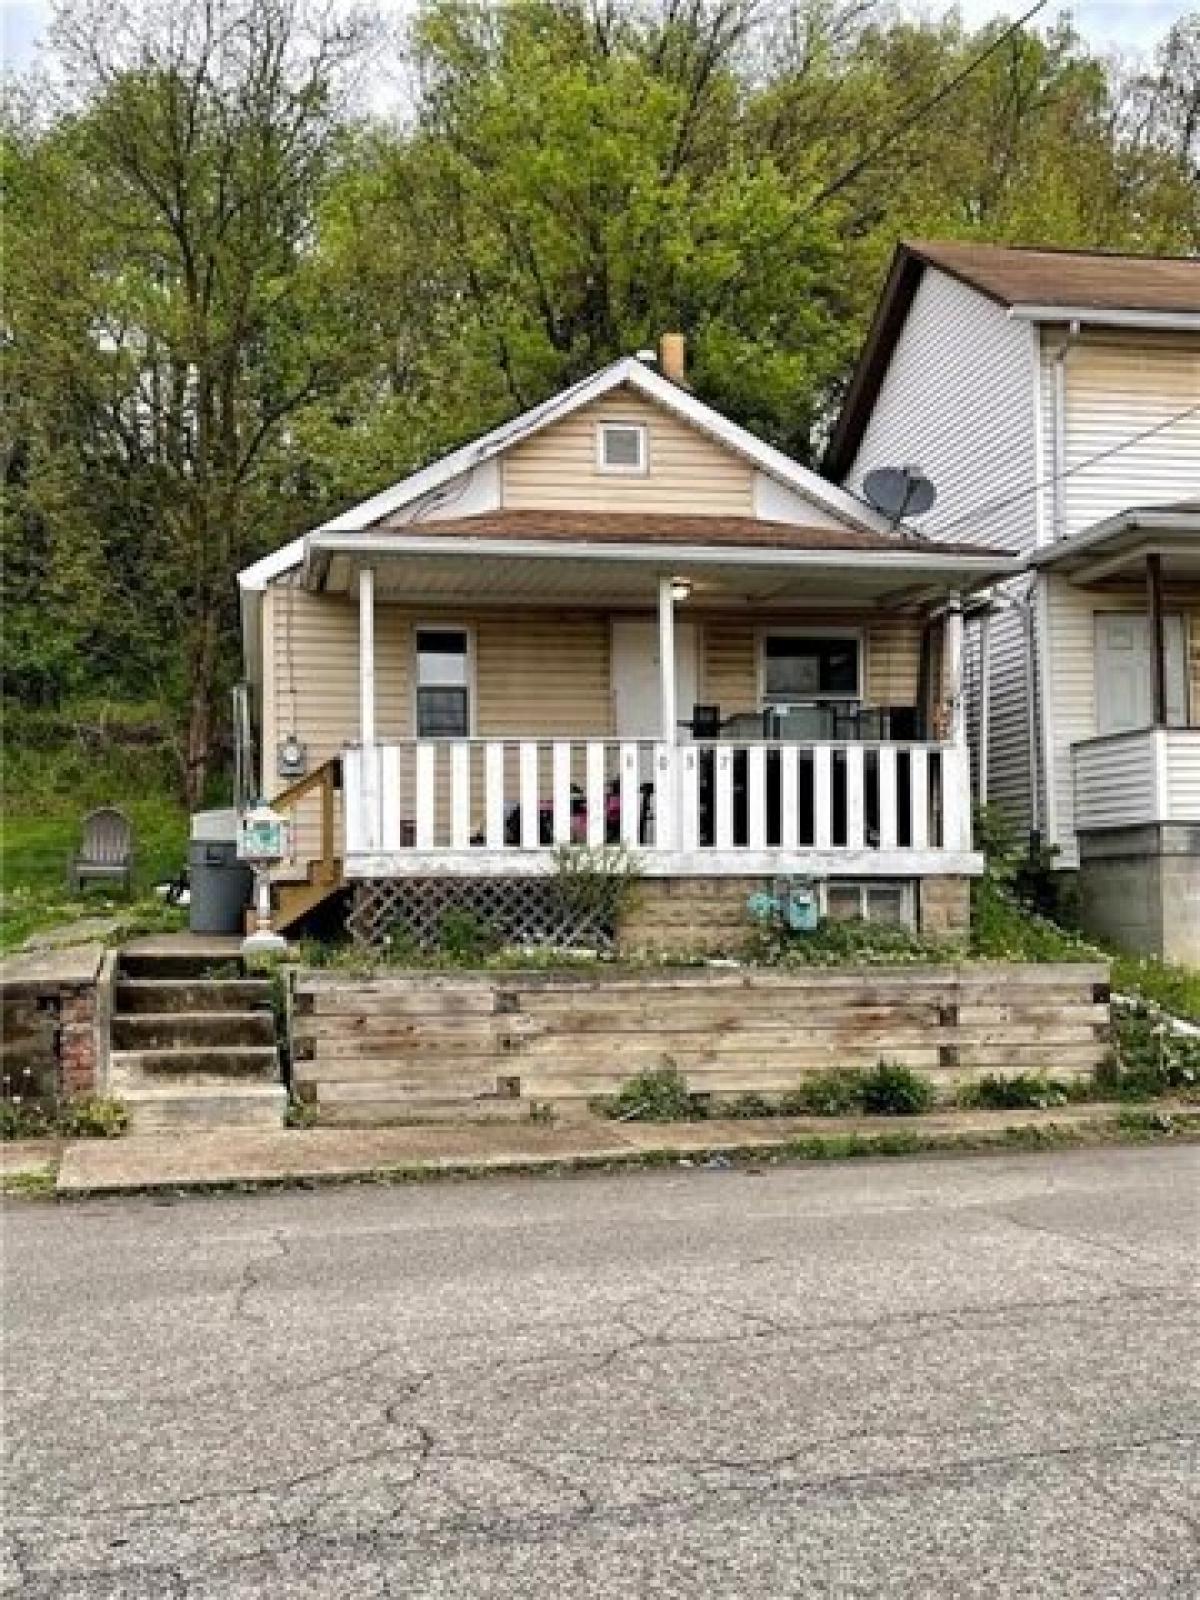 Picture of Home For Sale in Brackenridge, Pennsylvania, United States